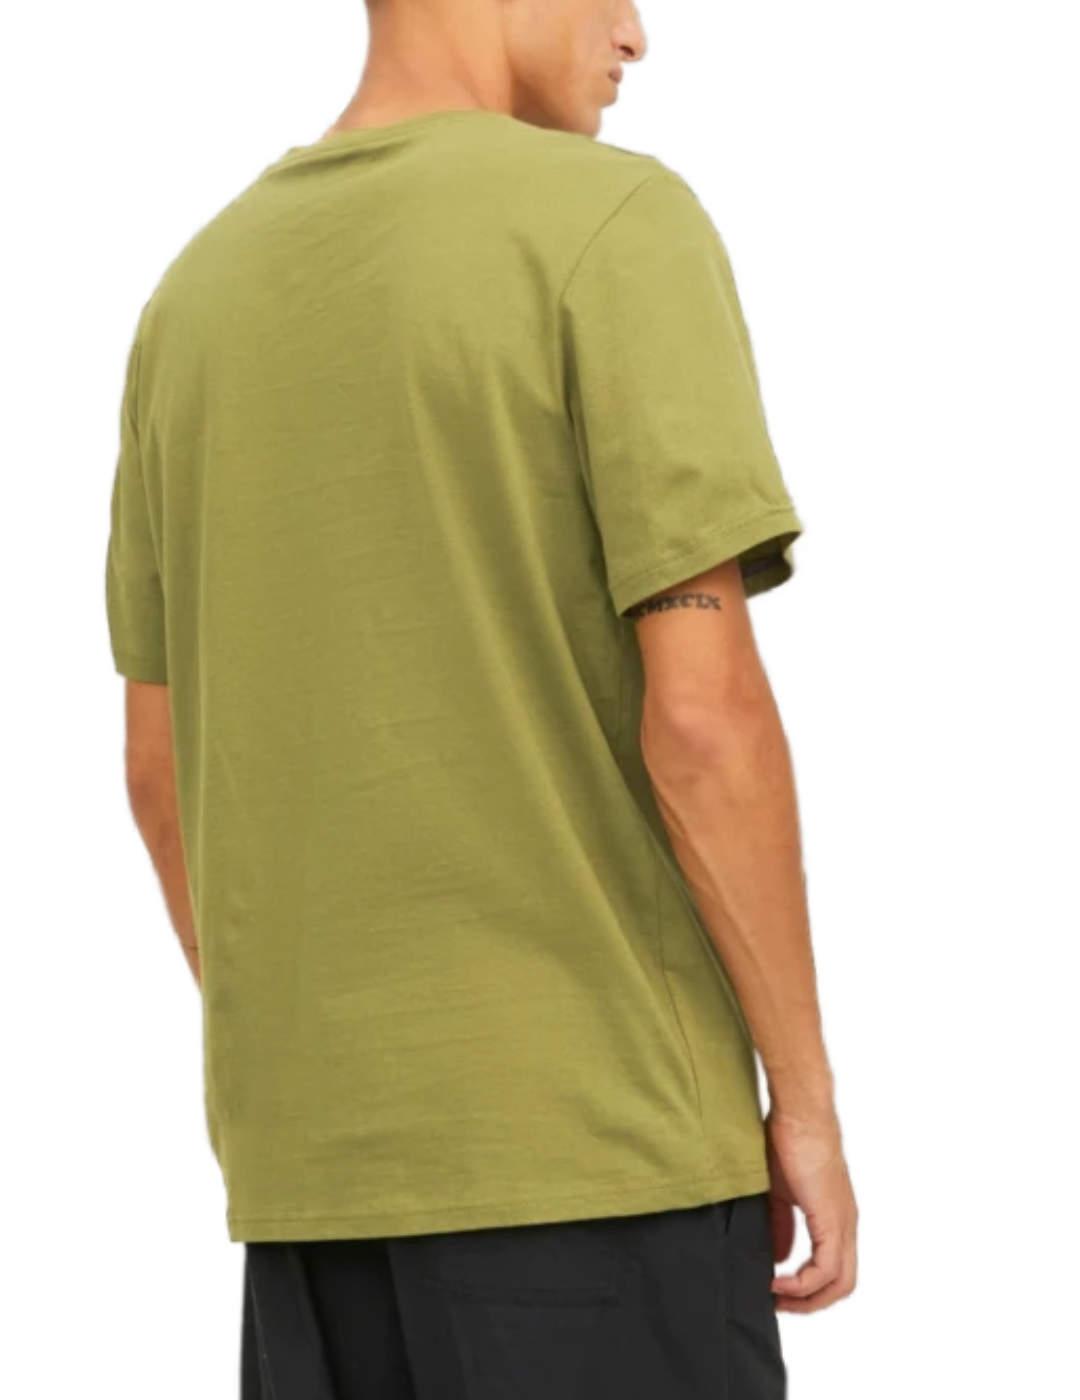 Camiseta Jack&Jones Dust verde de manga corta para hombre